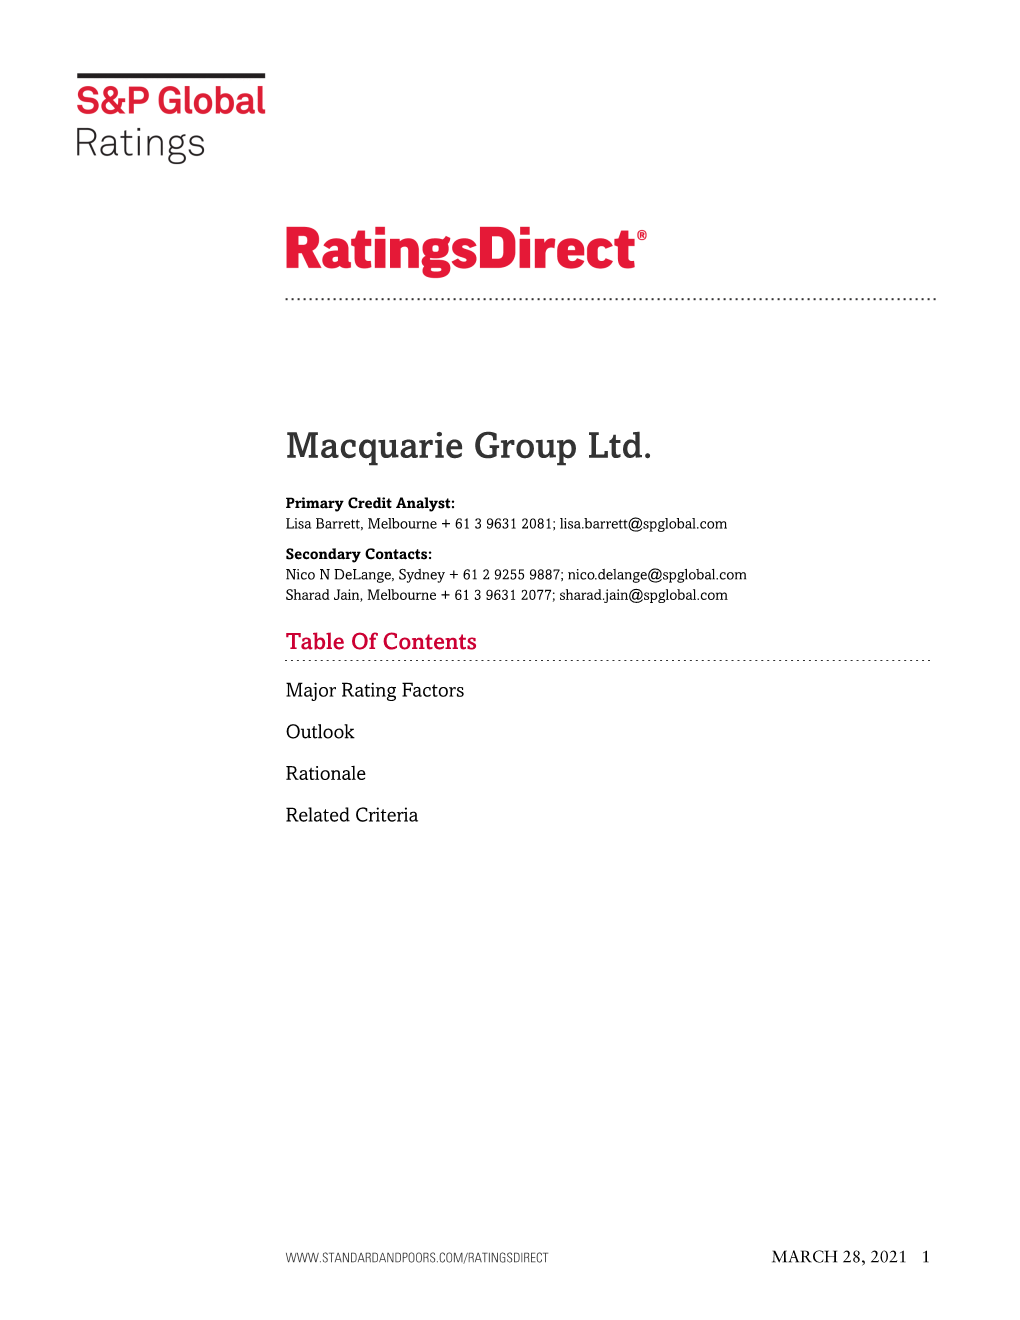 Macquarie Group Ltd